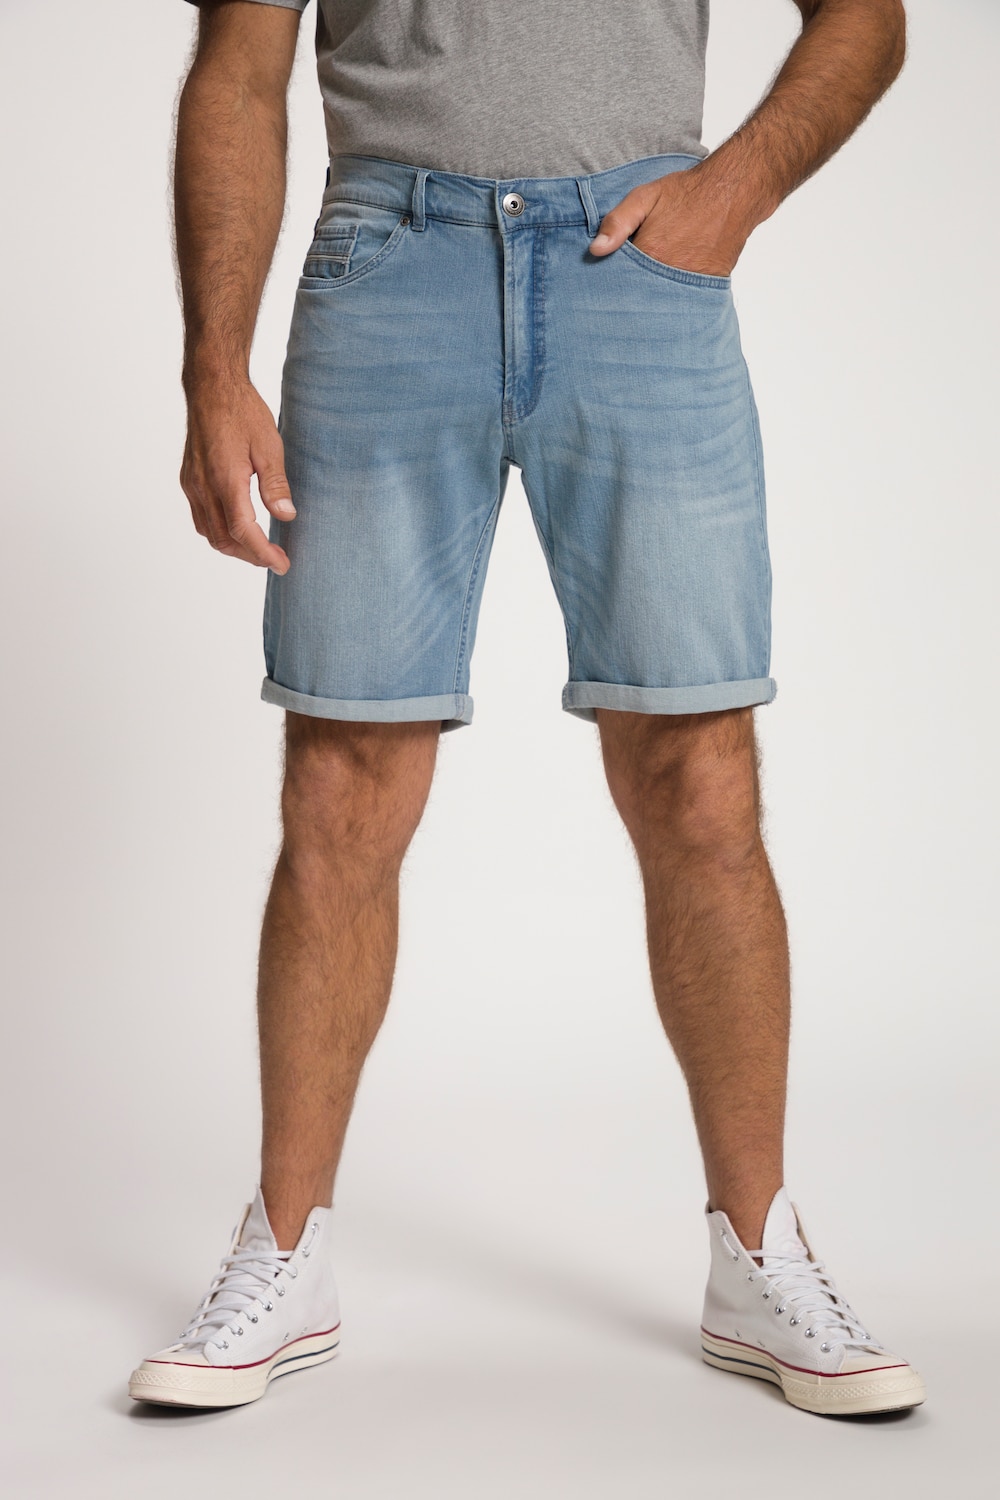 Plus Size High Stretch Belly Fit Denim Bermuda Shorts, Man, blue, size: 58, cotton, JP1880